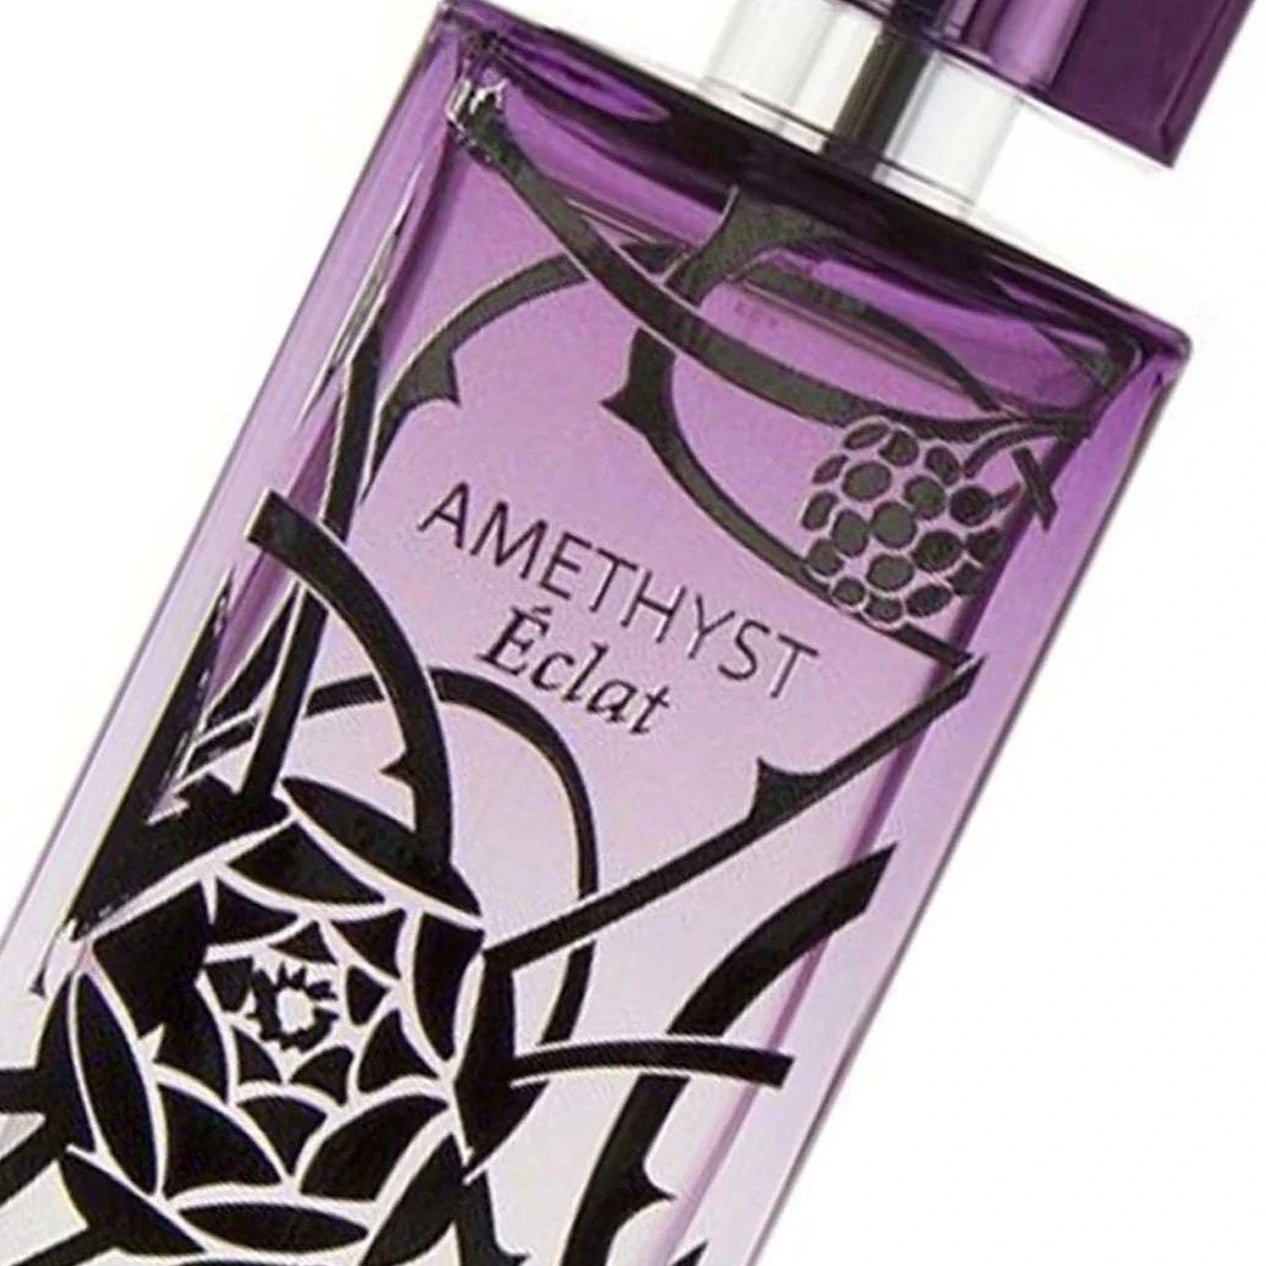 Lalique Amethyst Eclat EDP | My Perfume Shop Australia